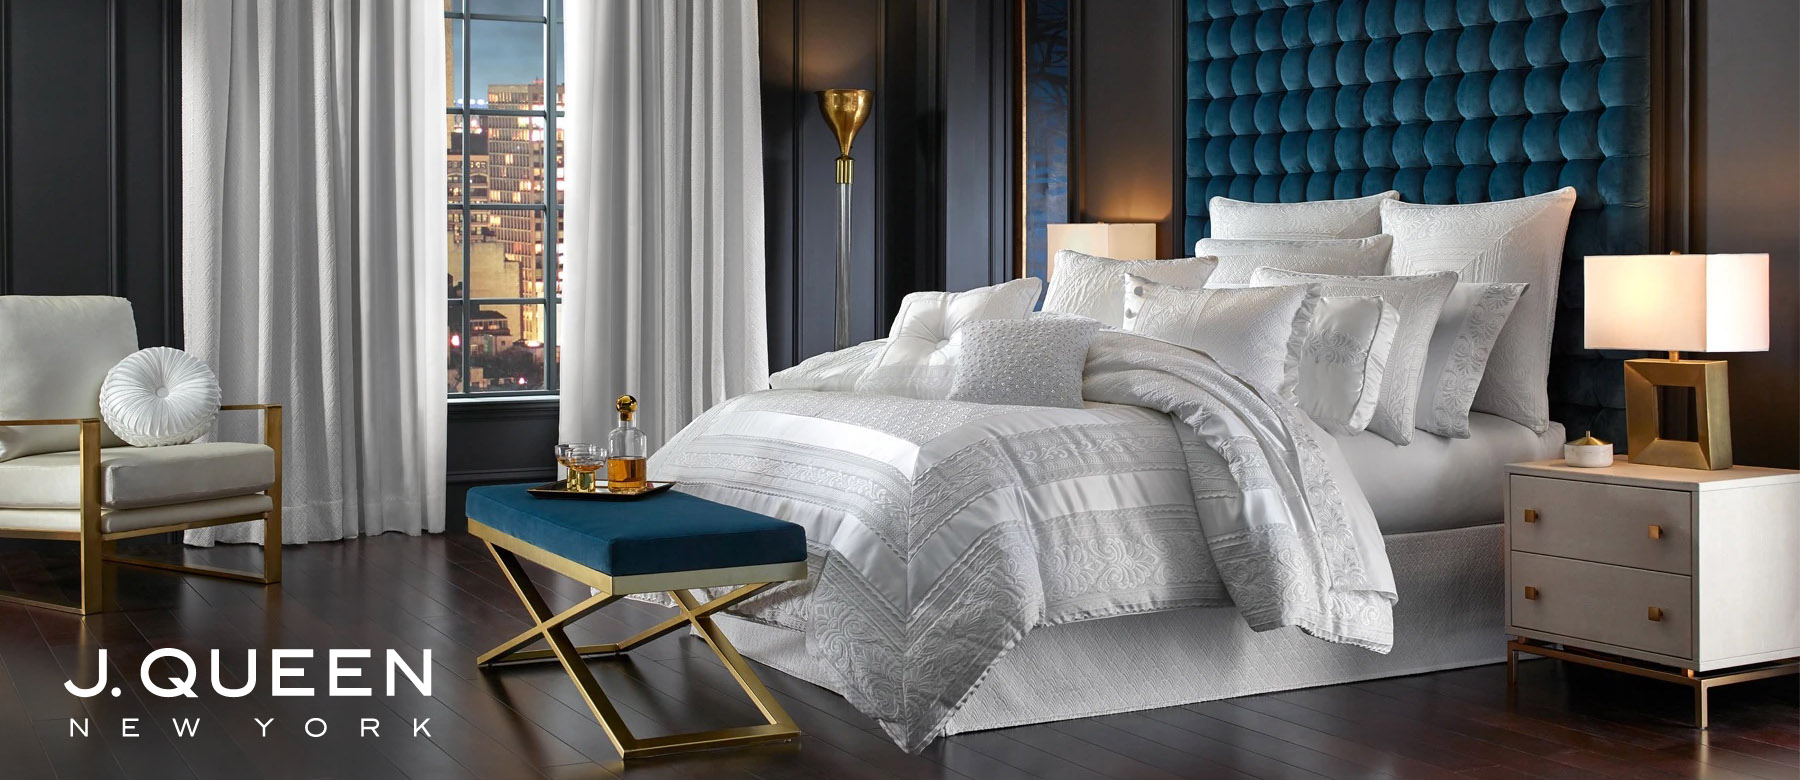 J Queen New York Bedding at Homethreads